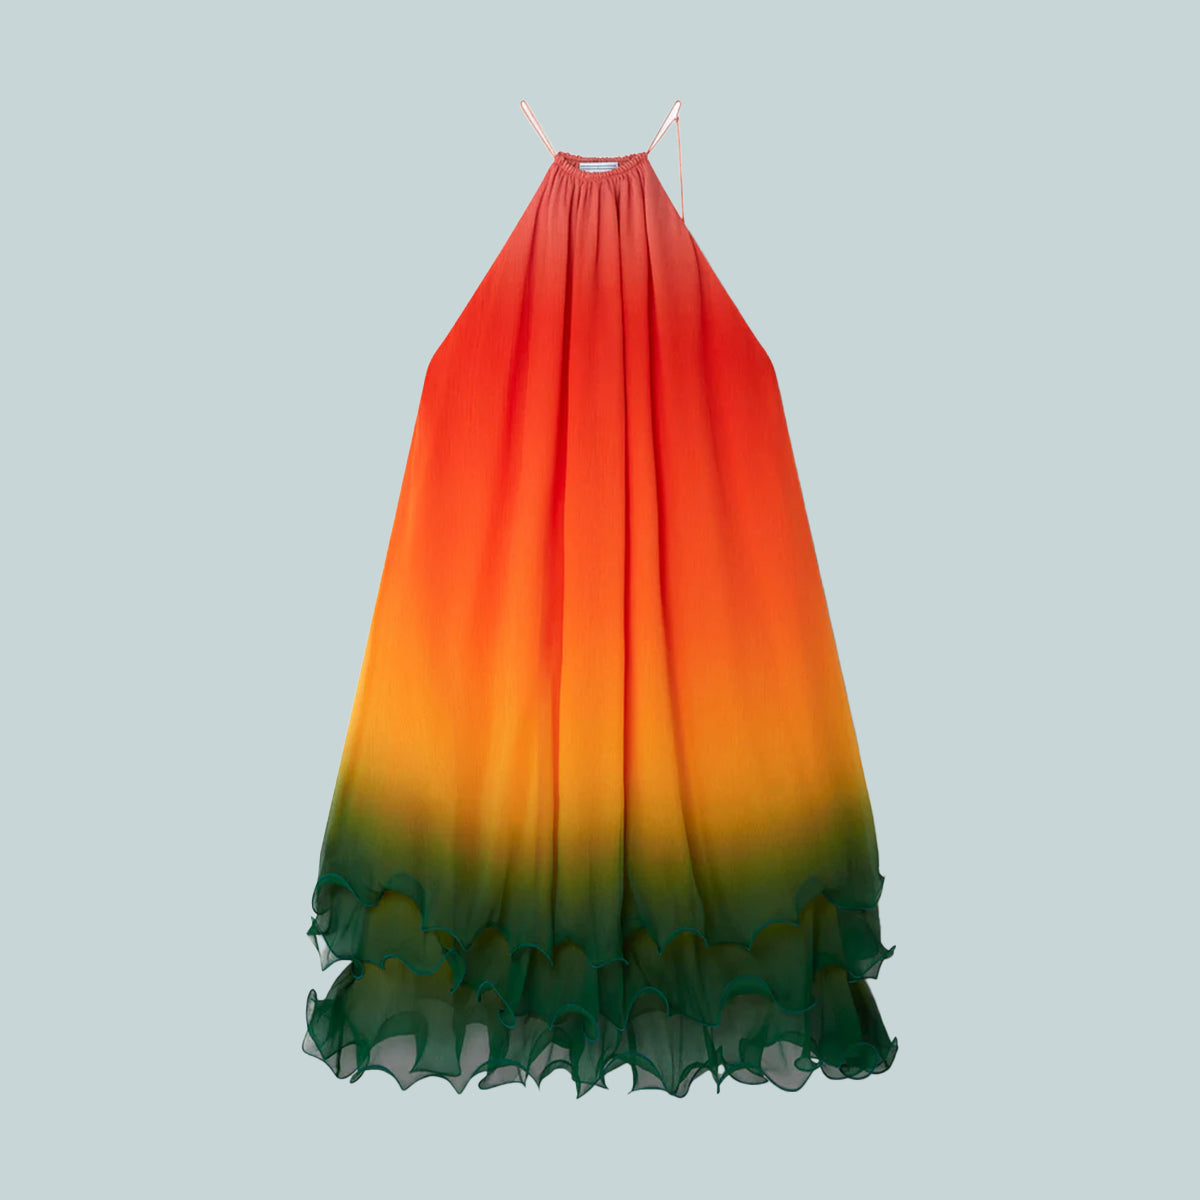 Rainbow Gradient Cocktail Dress